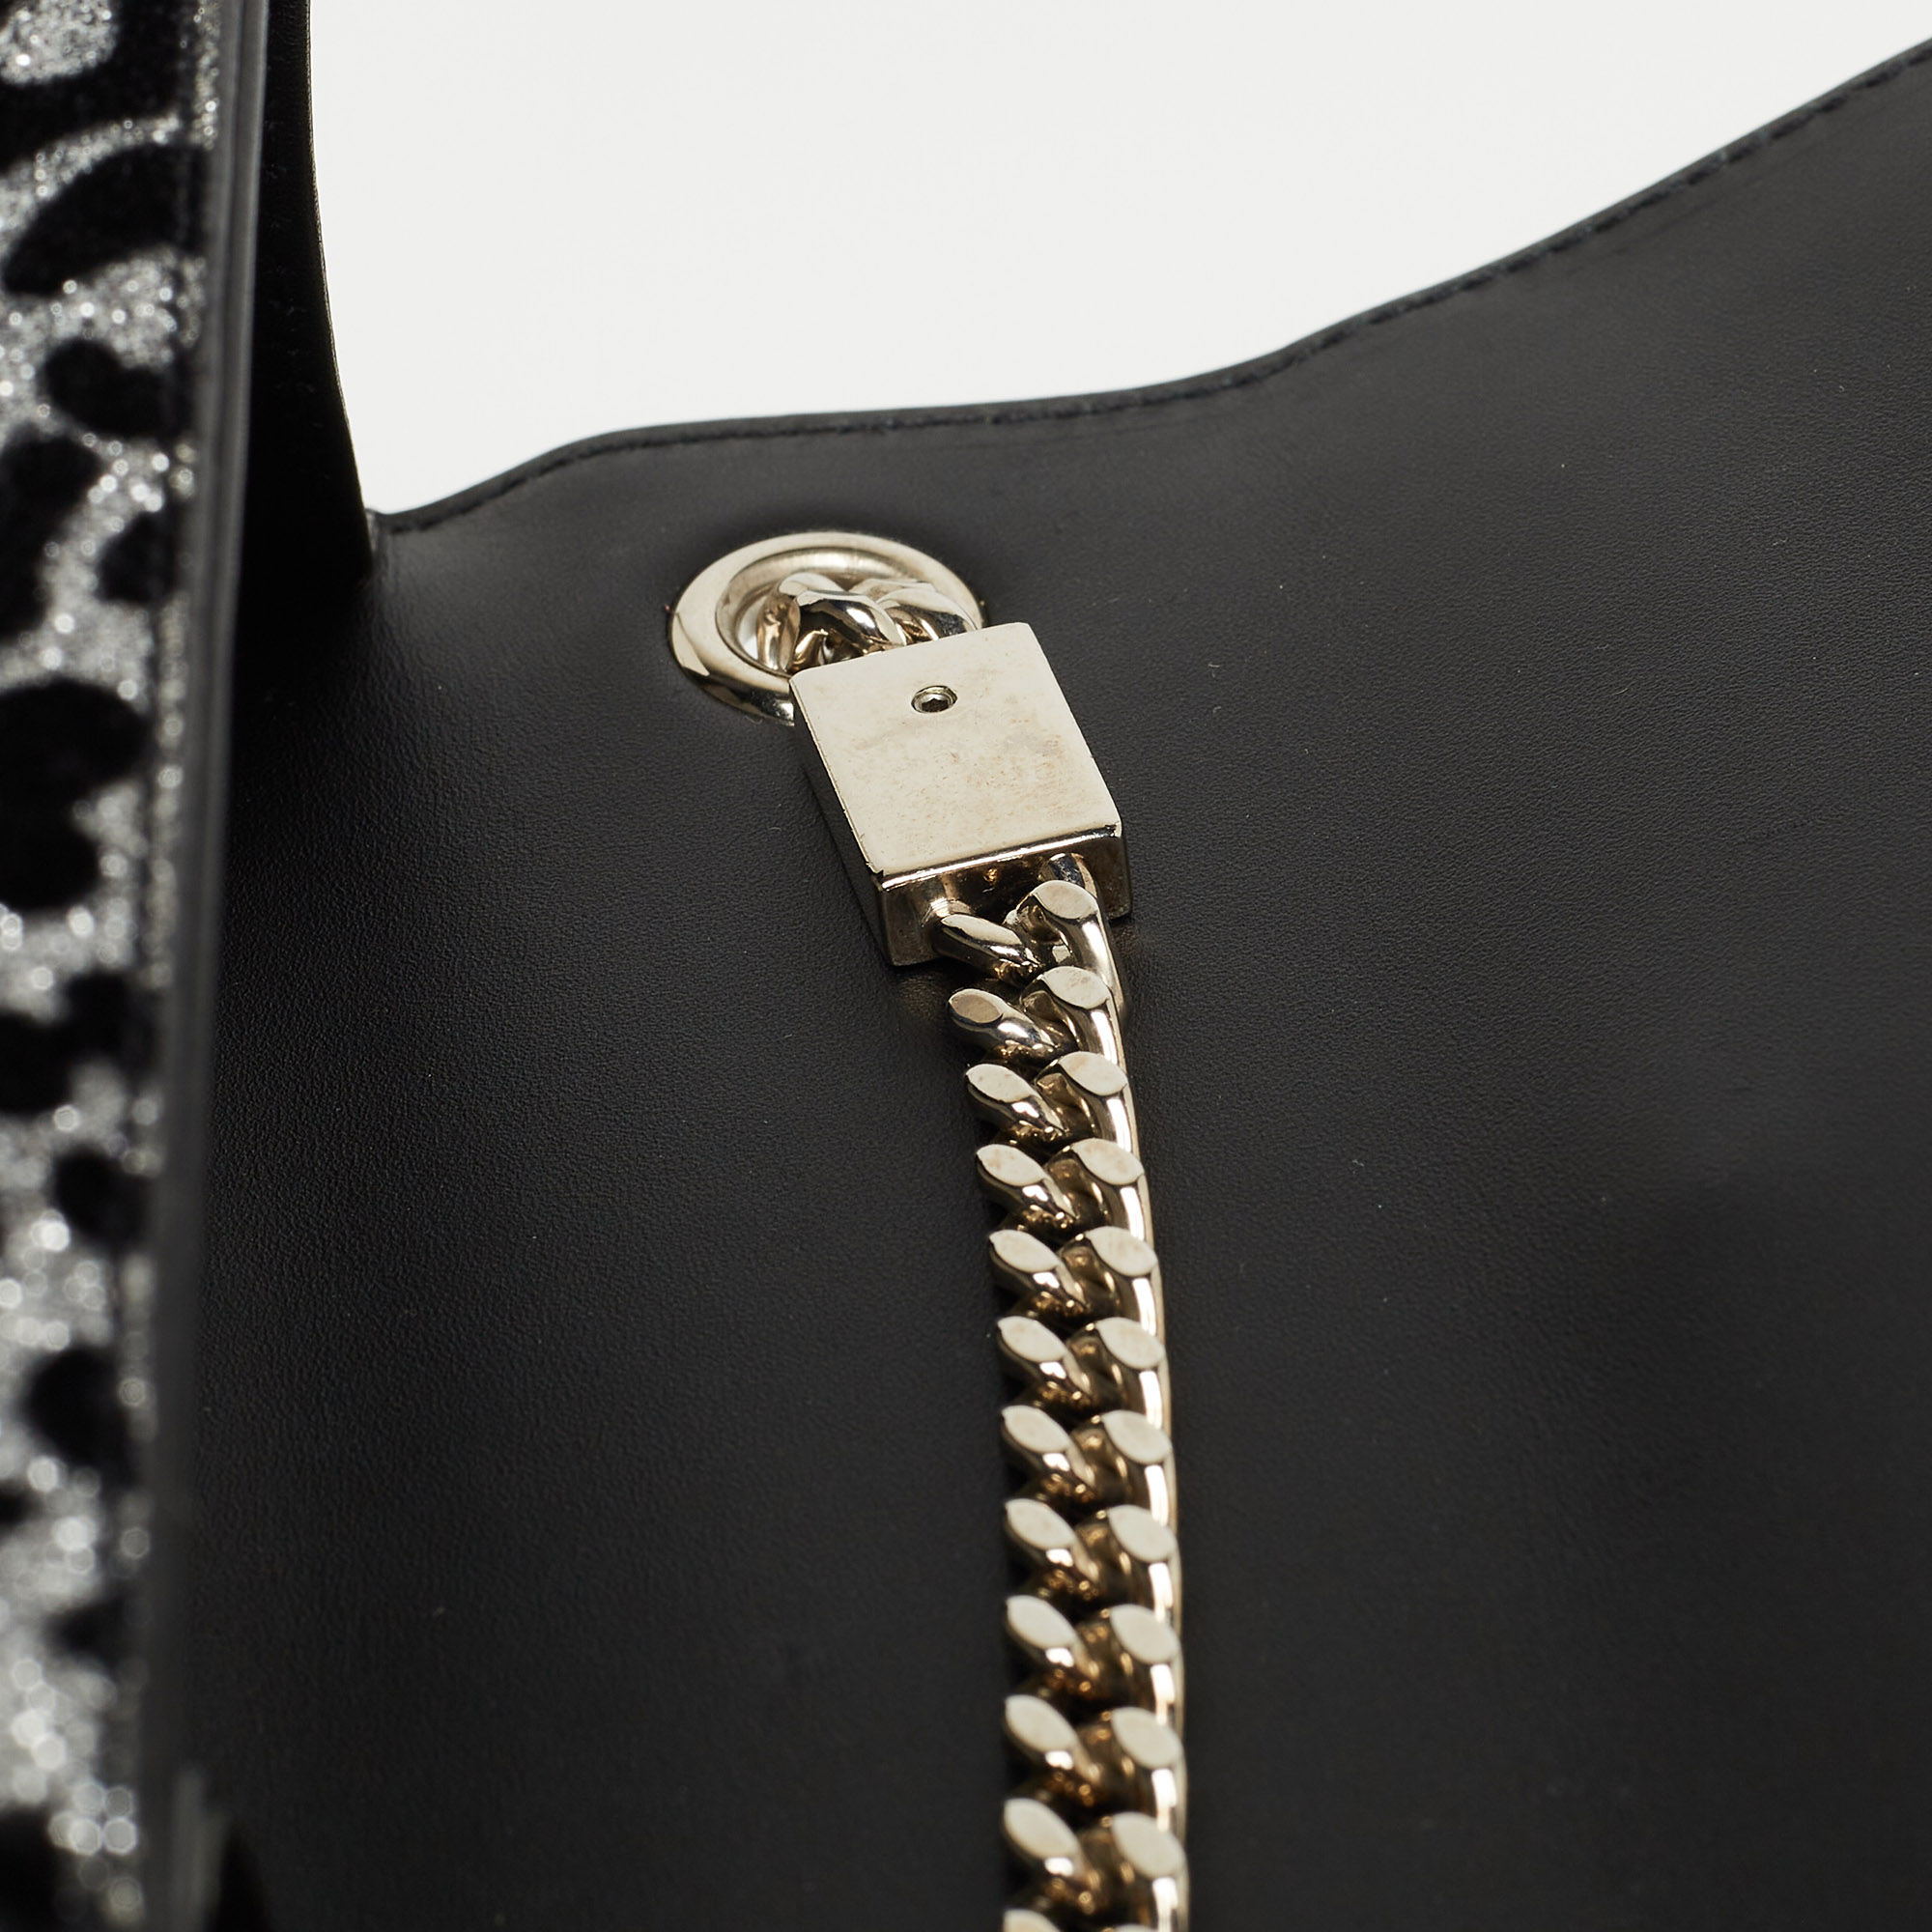 Saint Laurent Black/Silver Leopard Print Leather And Glitter Kate Tassel Flap Chain Crossbody Bag